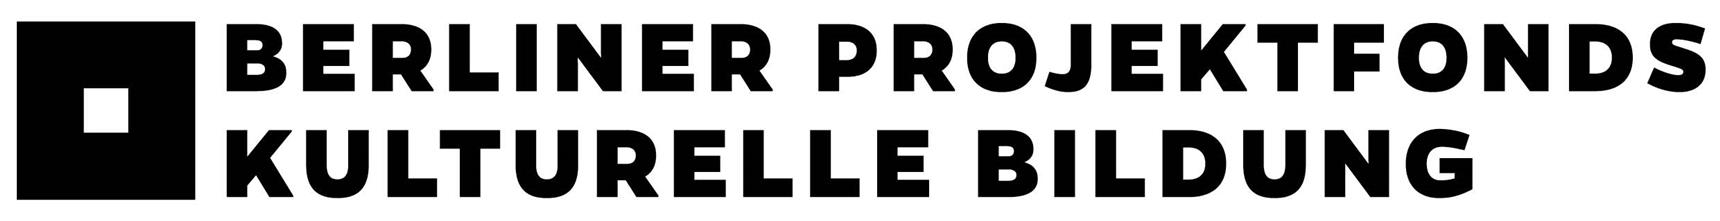 Logo_Berliner Projektfond kulturelle Bildung